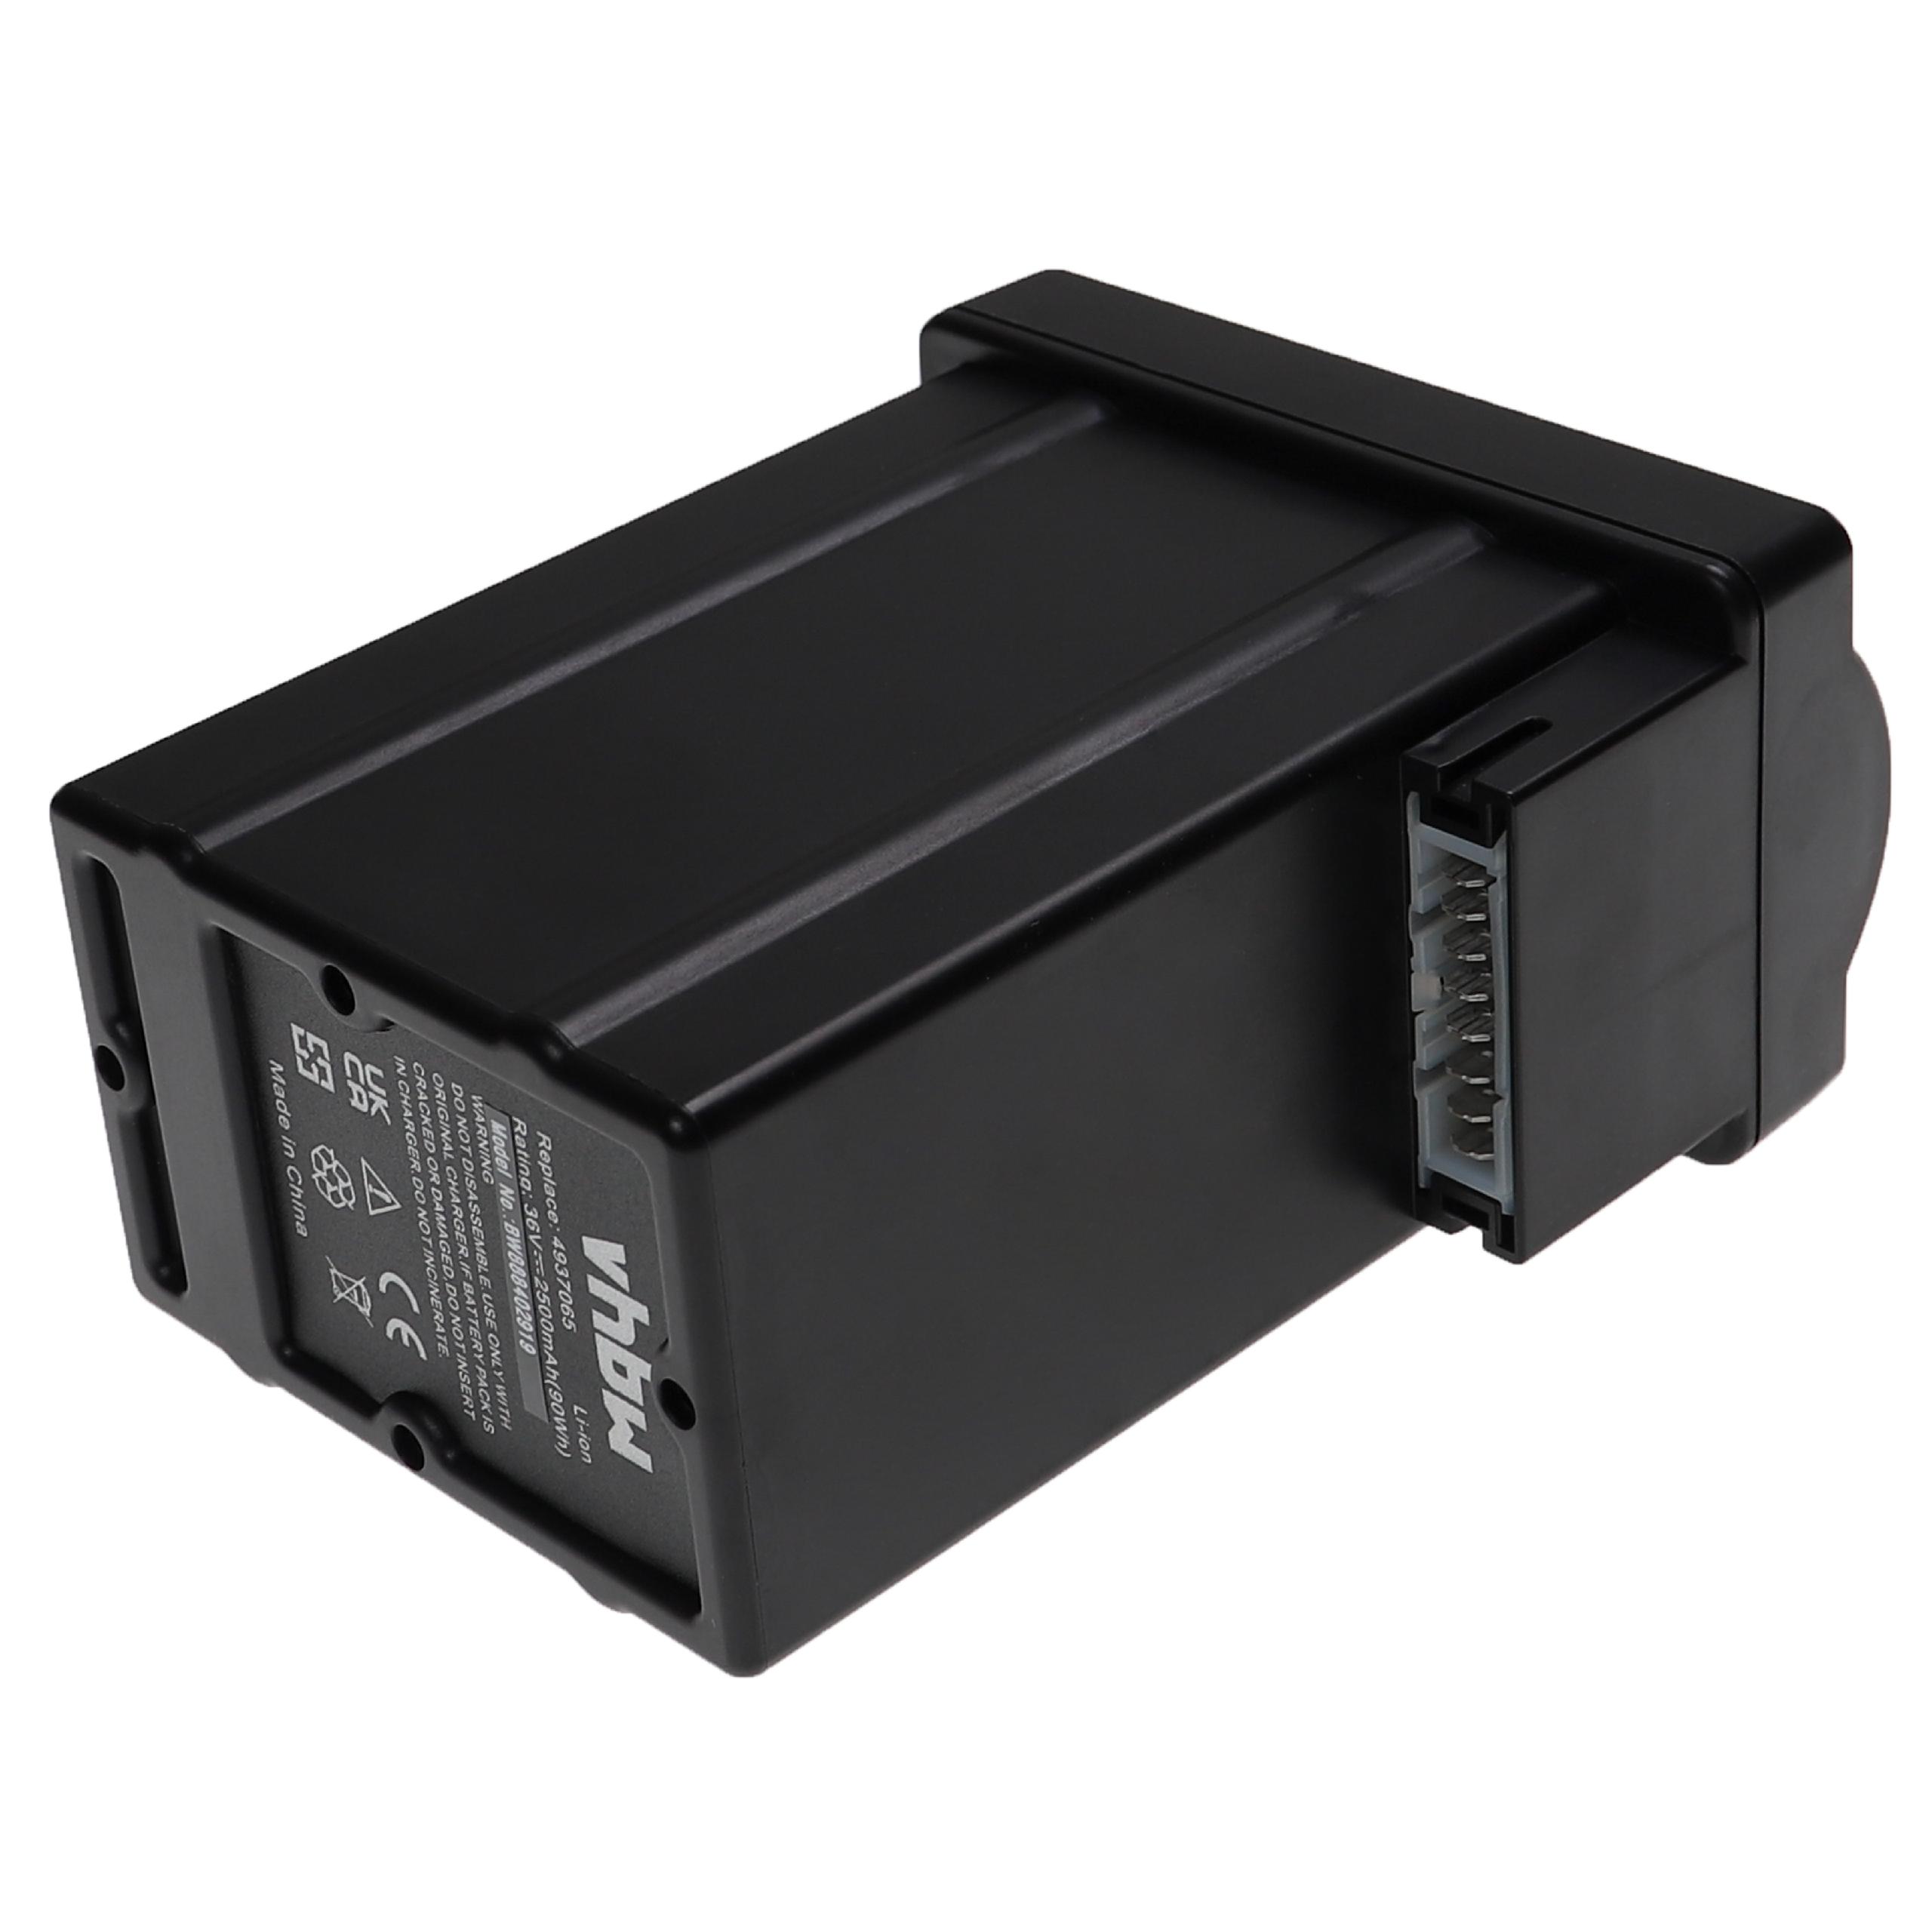 Lawnmower Battery Replacement for Wolf Garten Li-Ion Power-Pack 1, 4939090 - 2500mAh 36V Li-Ion, black